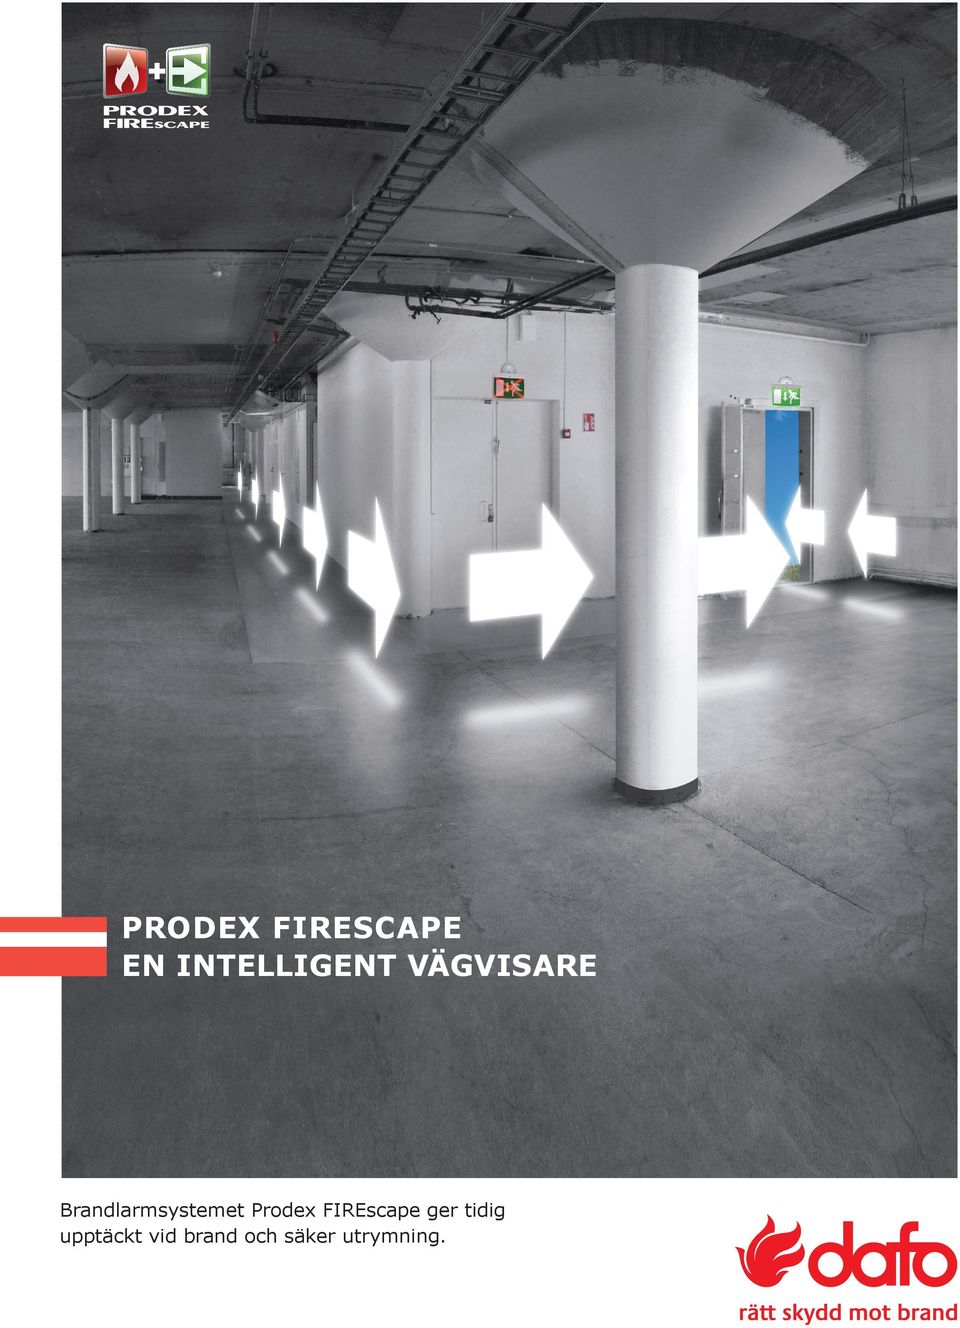 Prodex FIREscape ger tidig